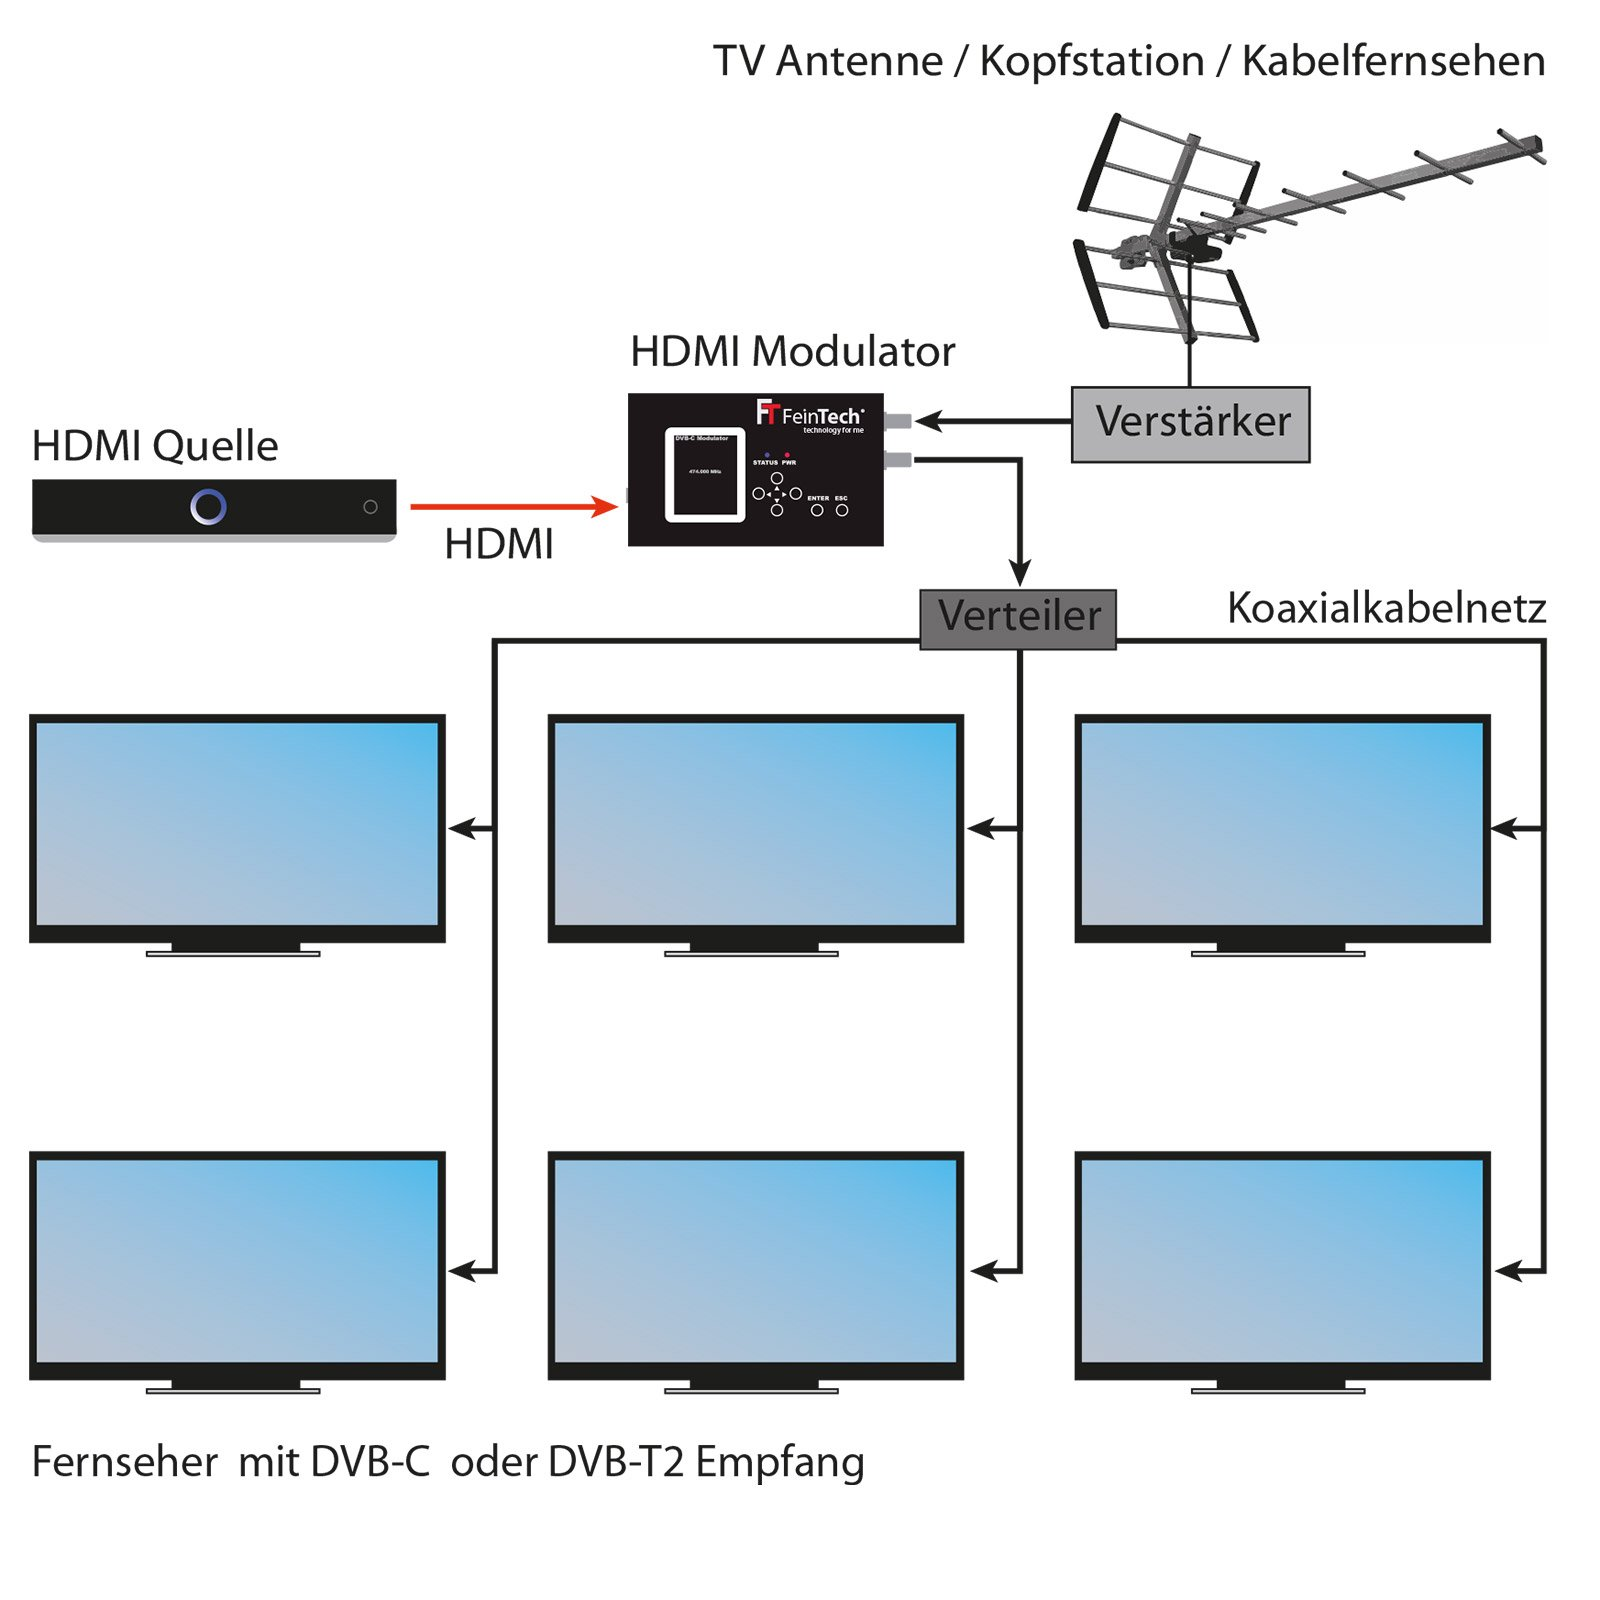 60Hz / 1080p VHQ00101 HDMI-Modulator FEINTECH DVB-C DVB-T